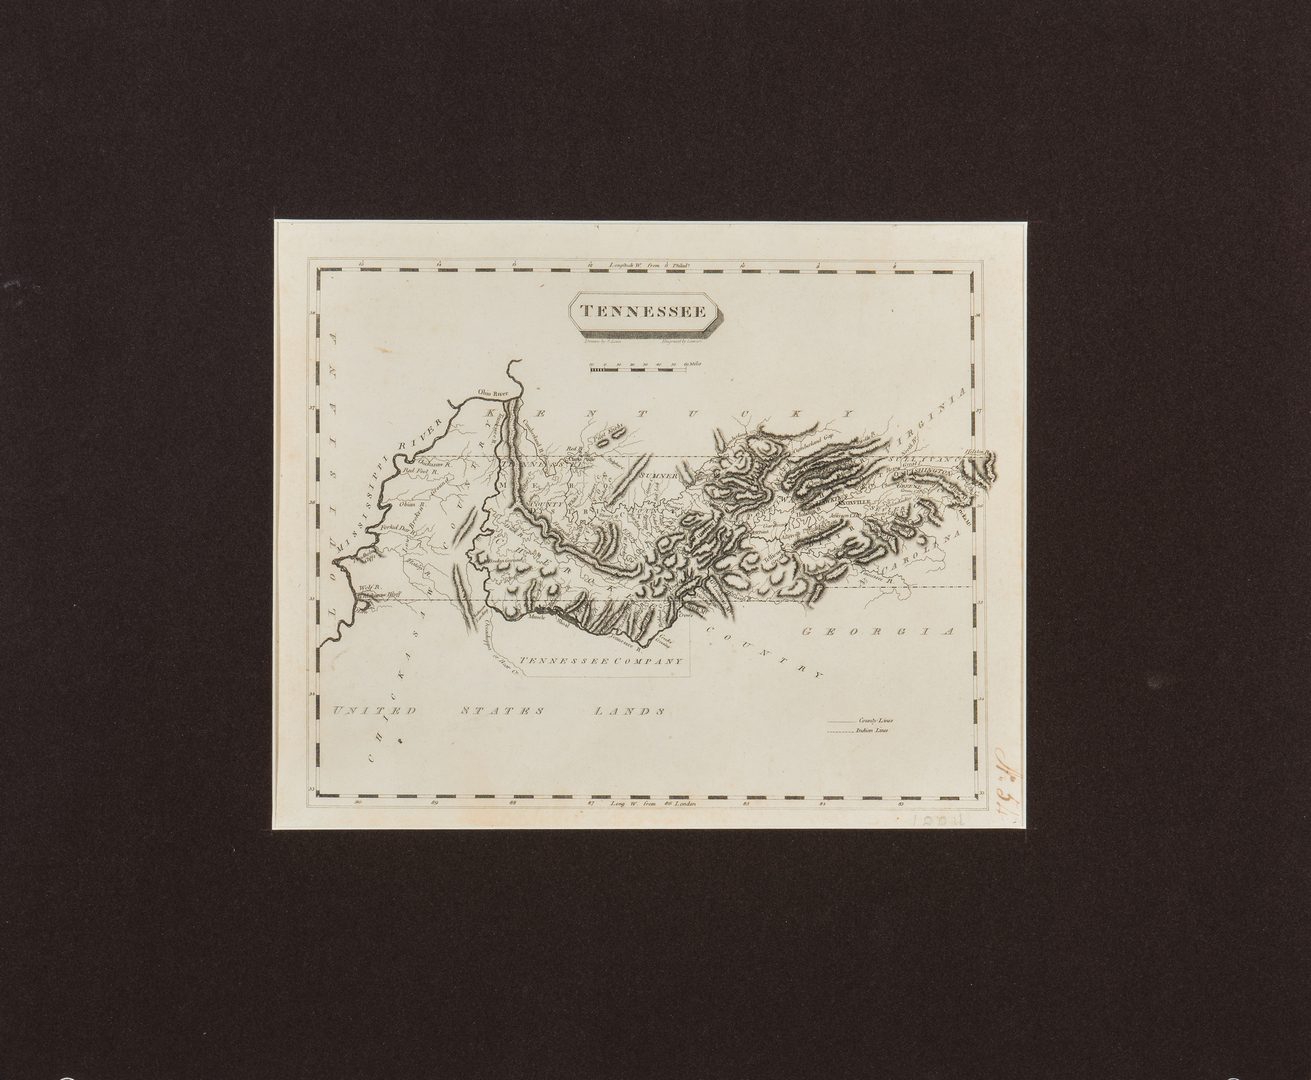 Lot 339: Tennessee Map, Samuel Lewis & Alexander Lawson, 1804